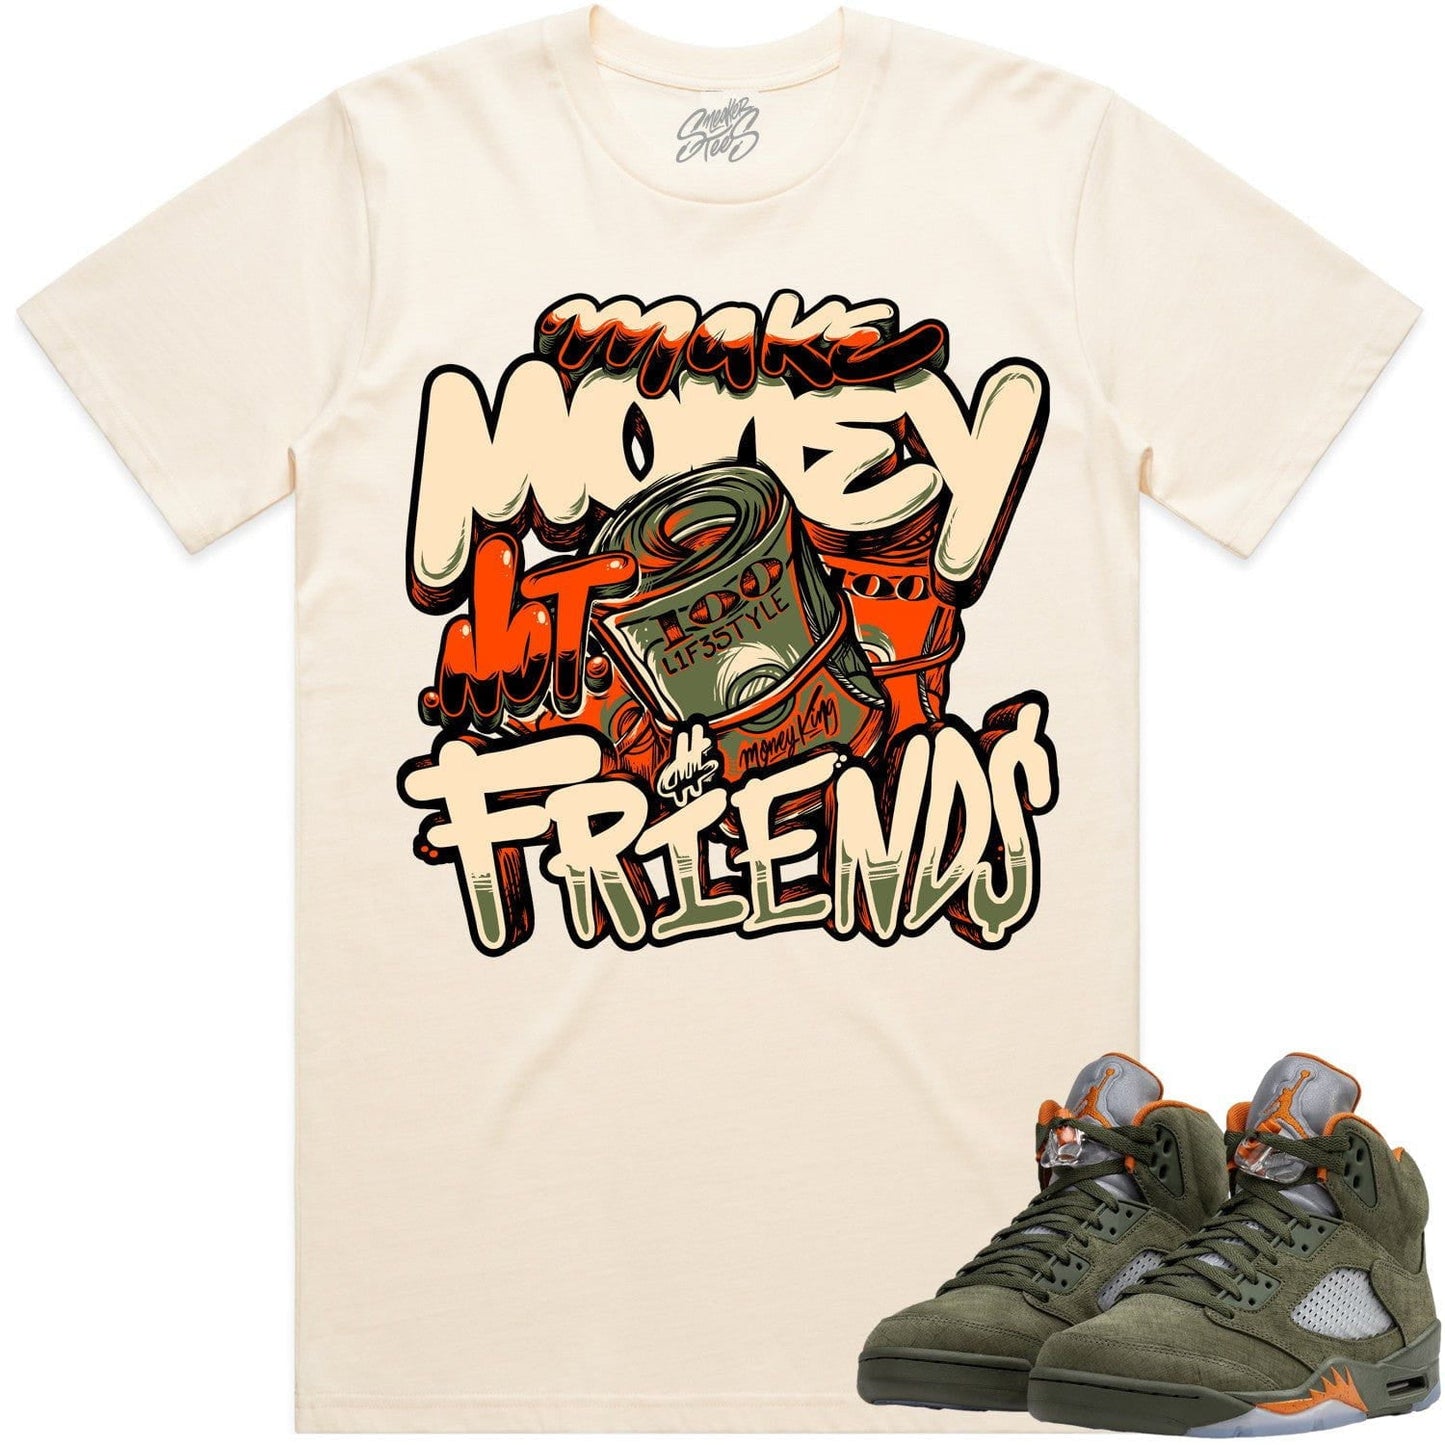 Olive 5s Shirts - Jordan Retro 5 Olive Sneaker Tees - Make Money